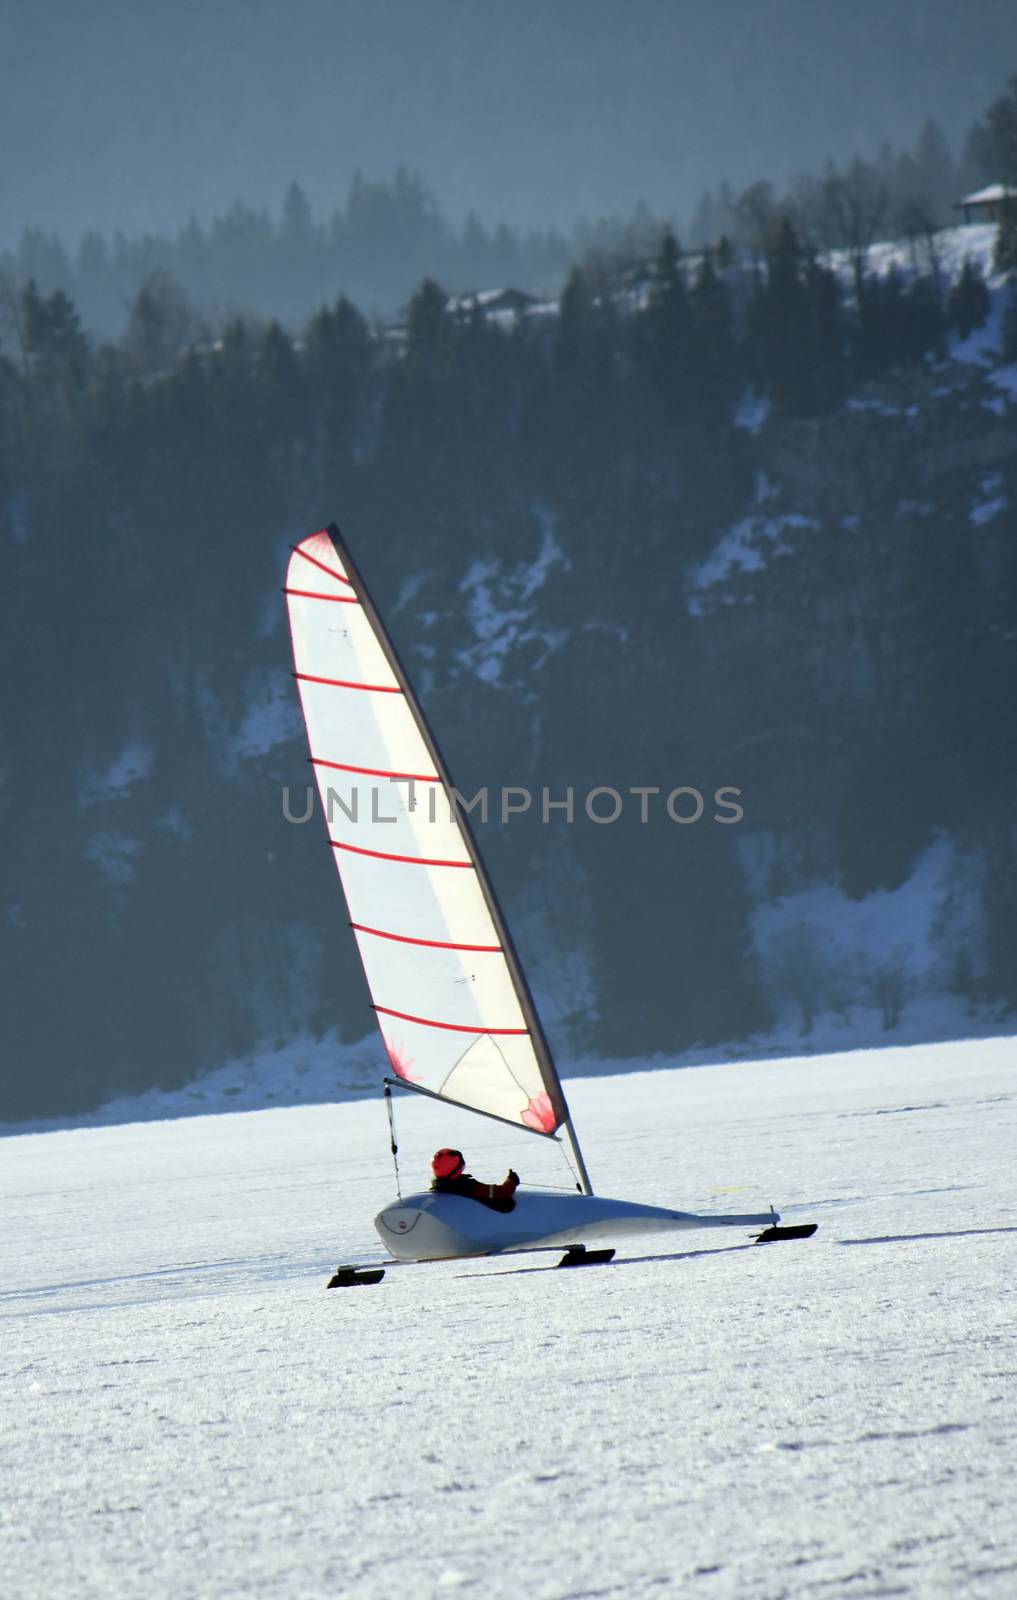 Ice sailing on a frozen lake, Switzerland by Elenaphotos21